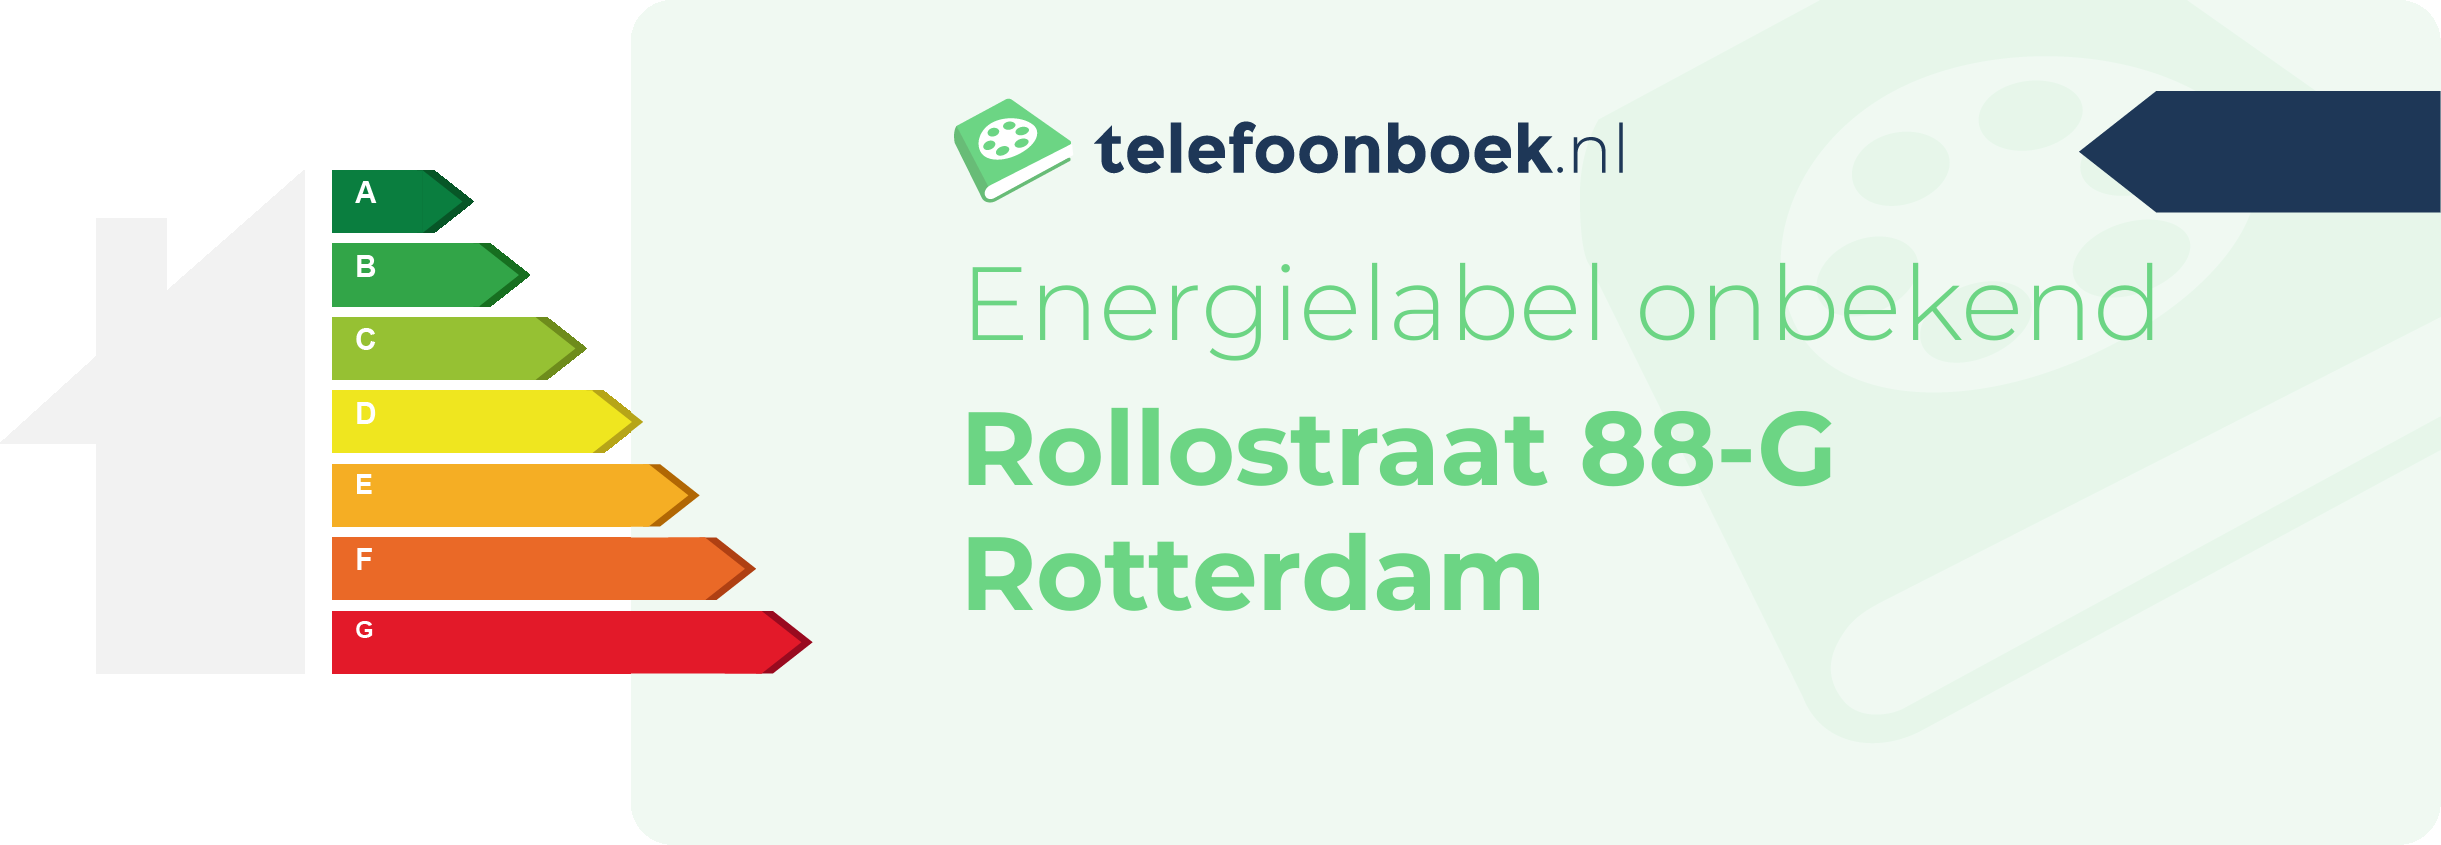 Energielabel Rollostraat 88-G Rotterdam